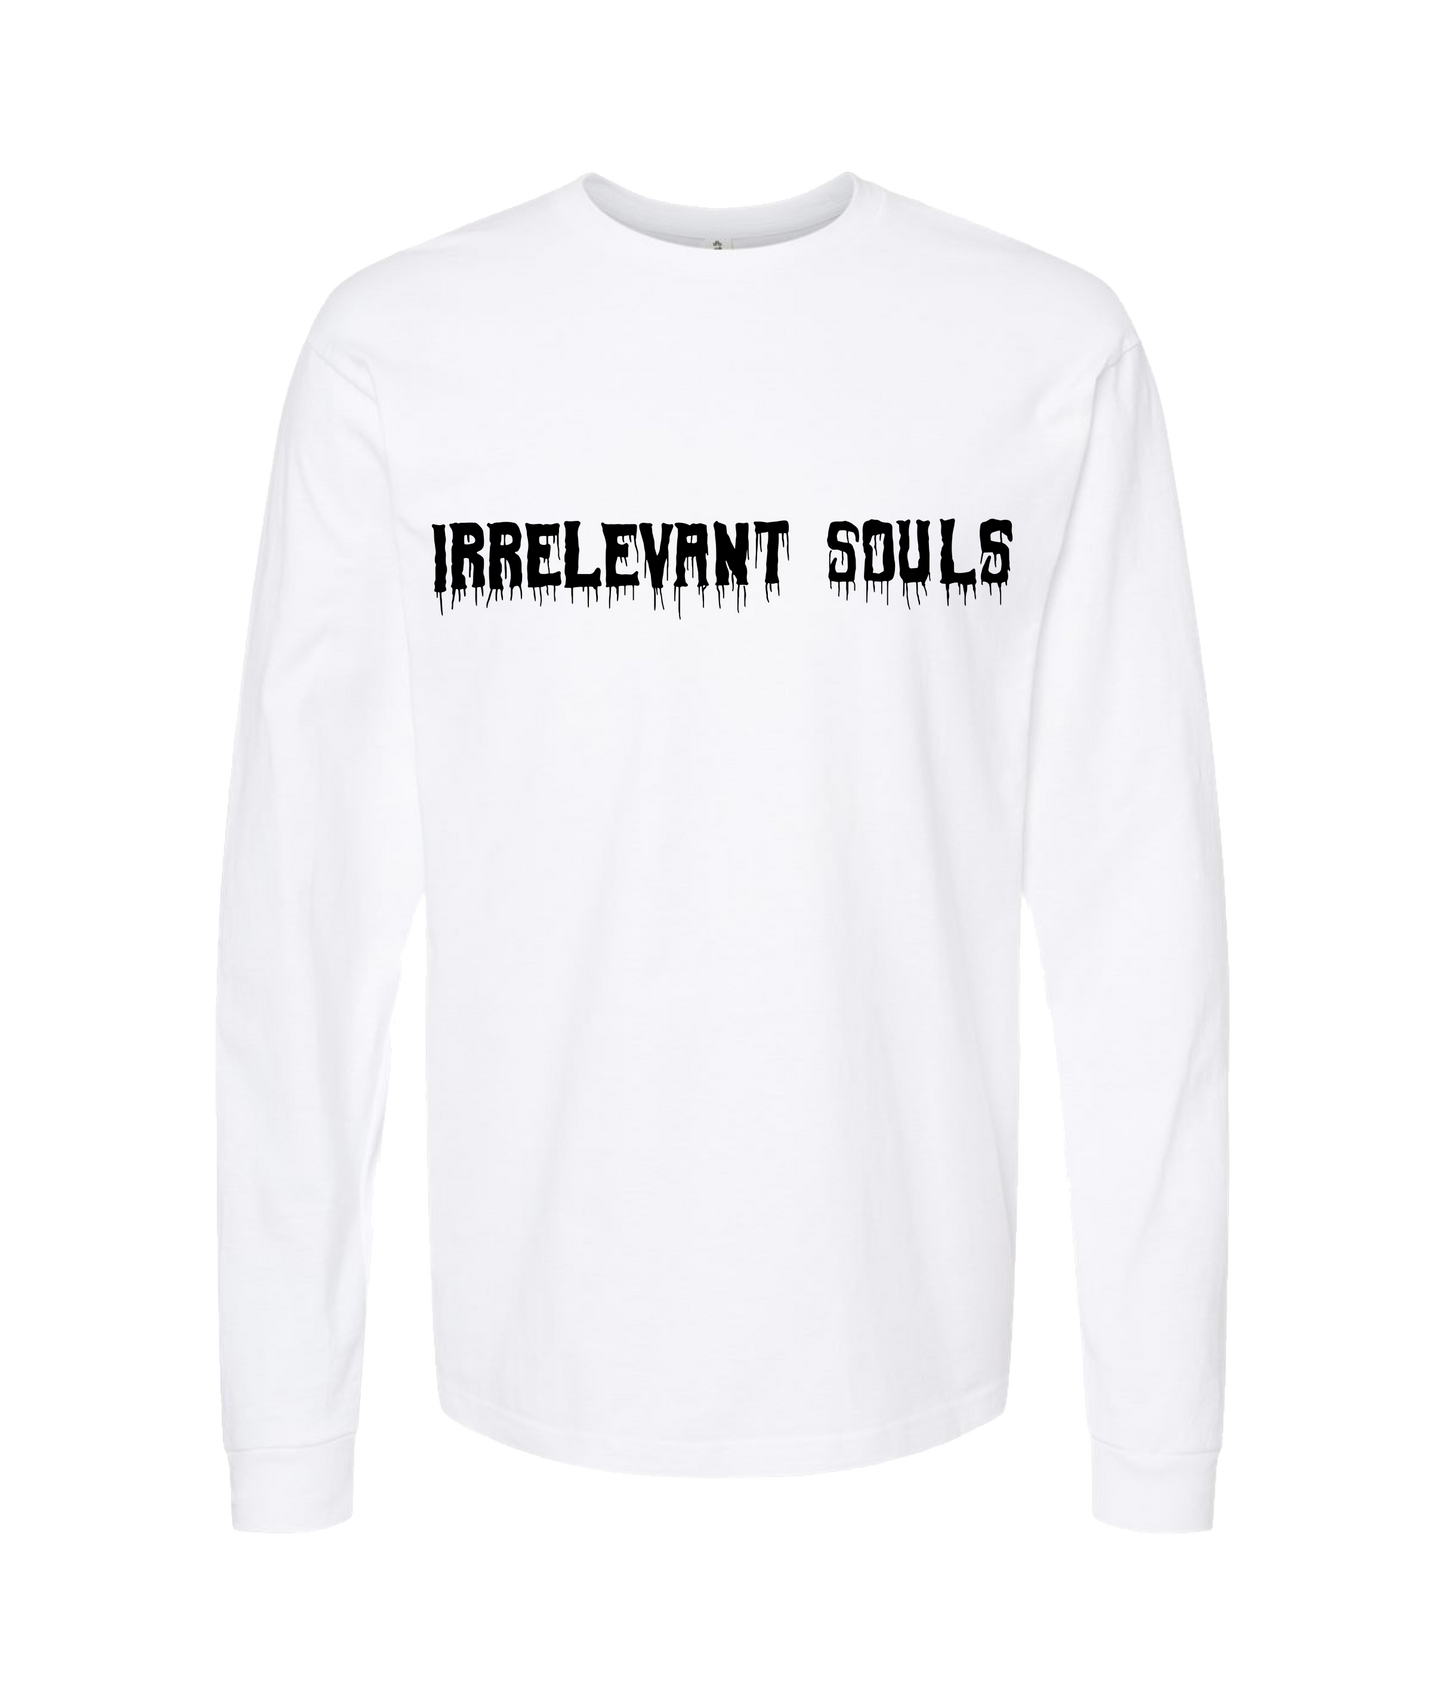 Irrelevant Souls - LOGO 1 - White Long Sleeve T